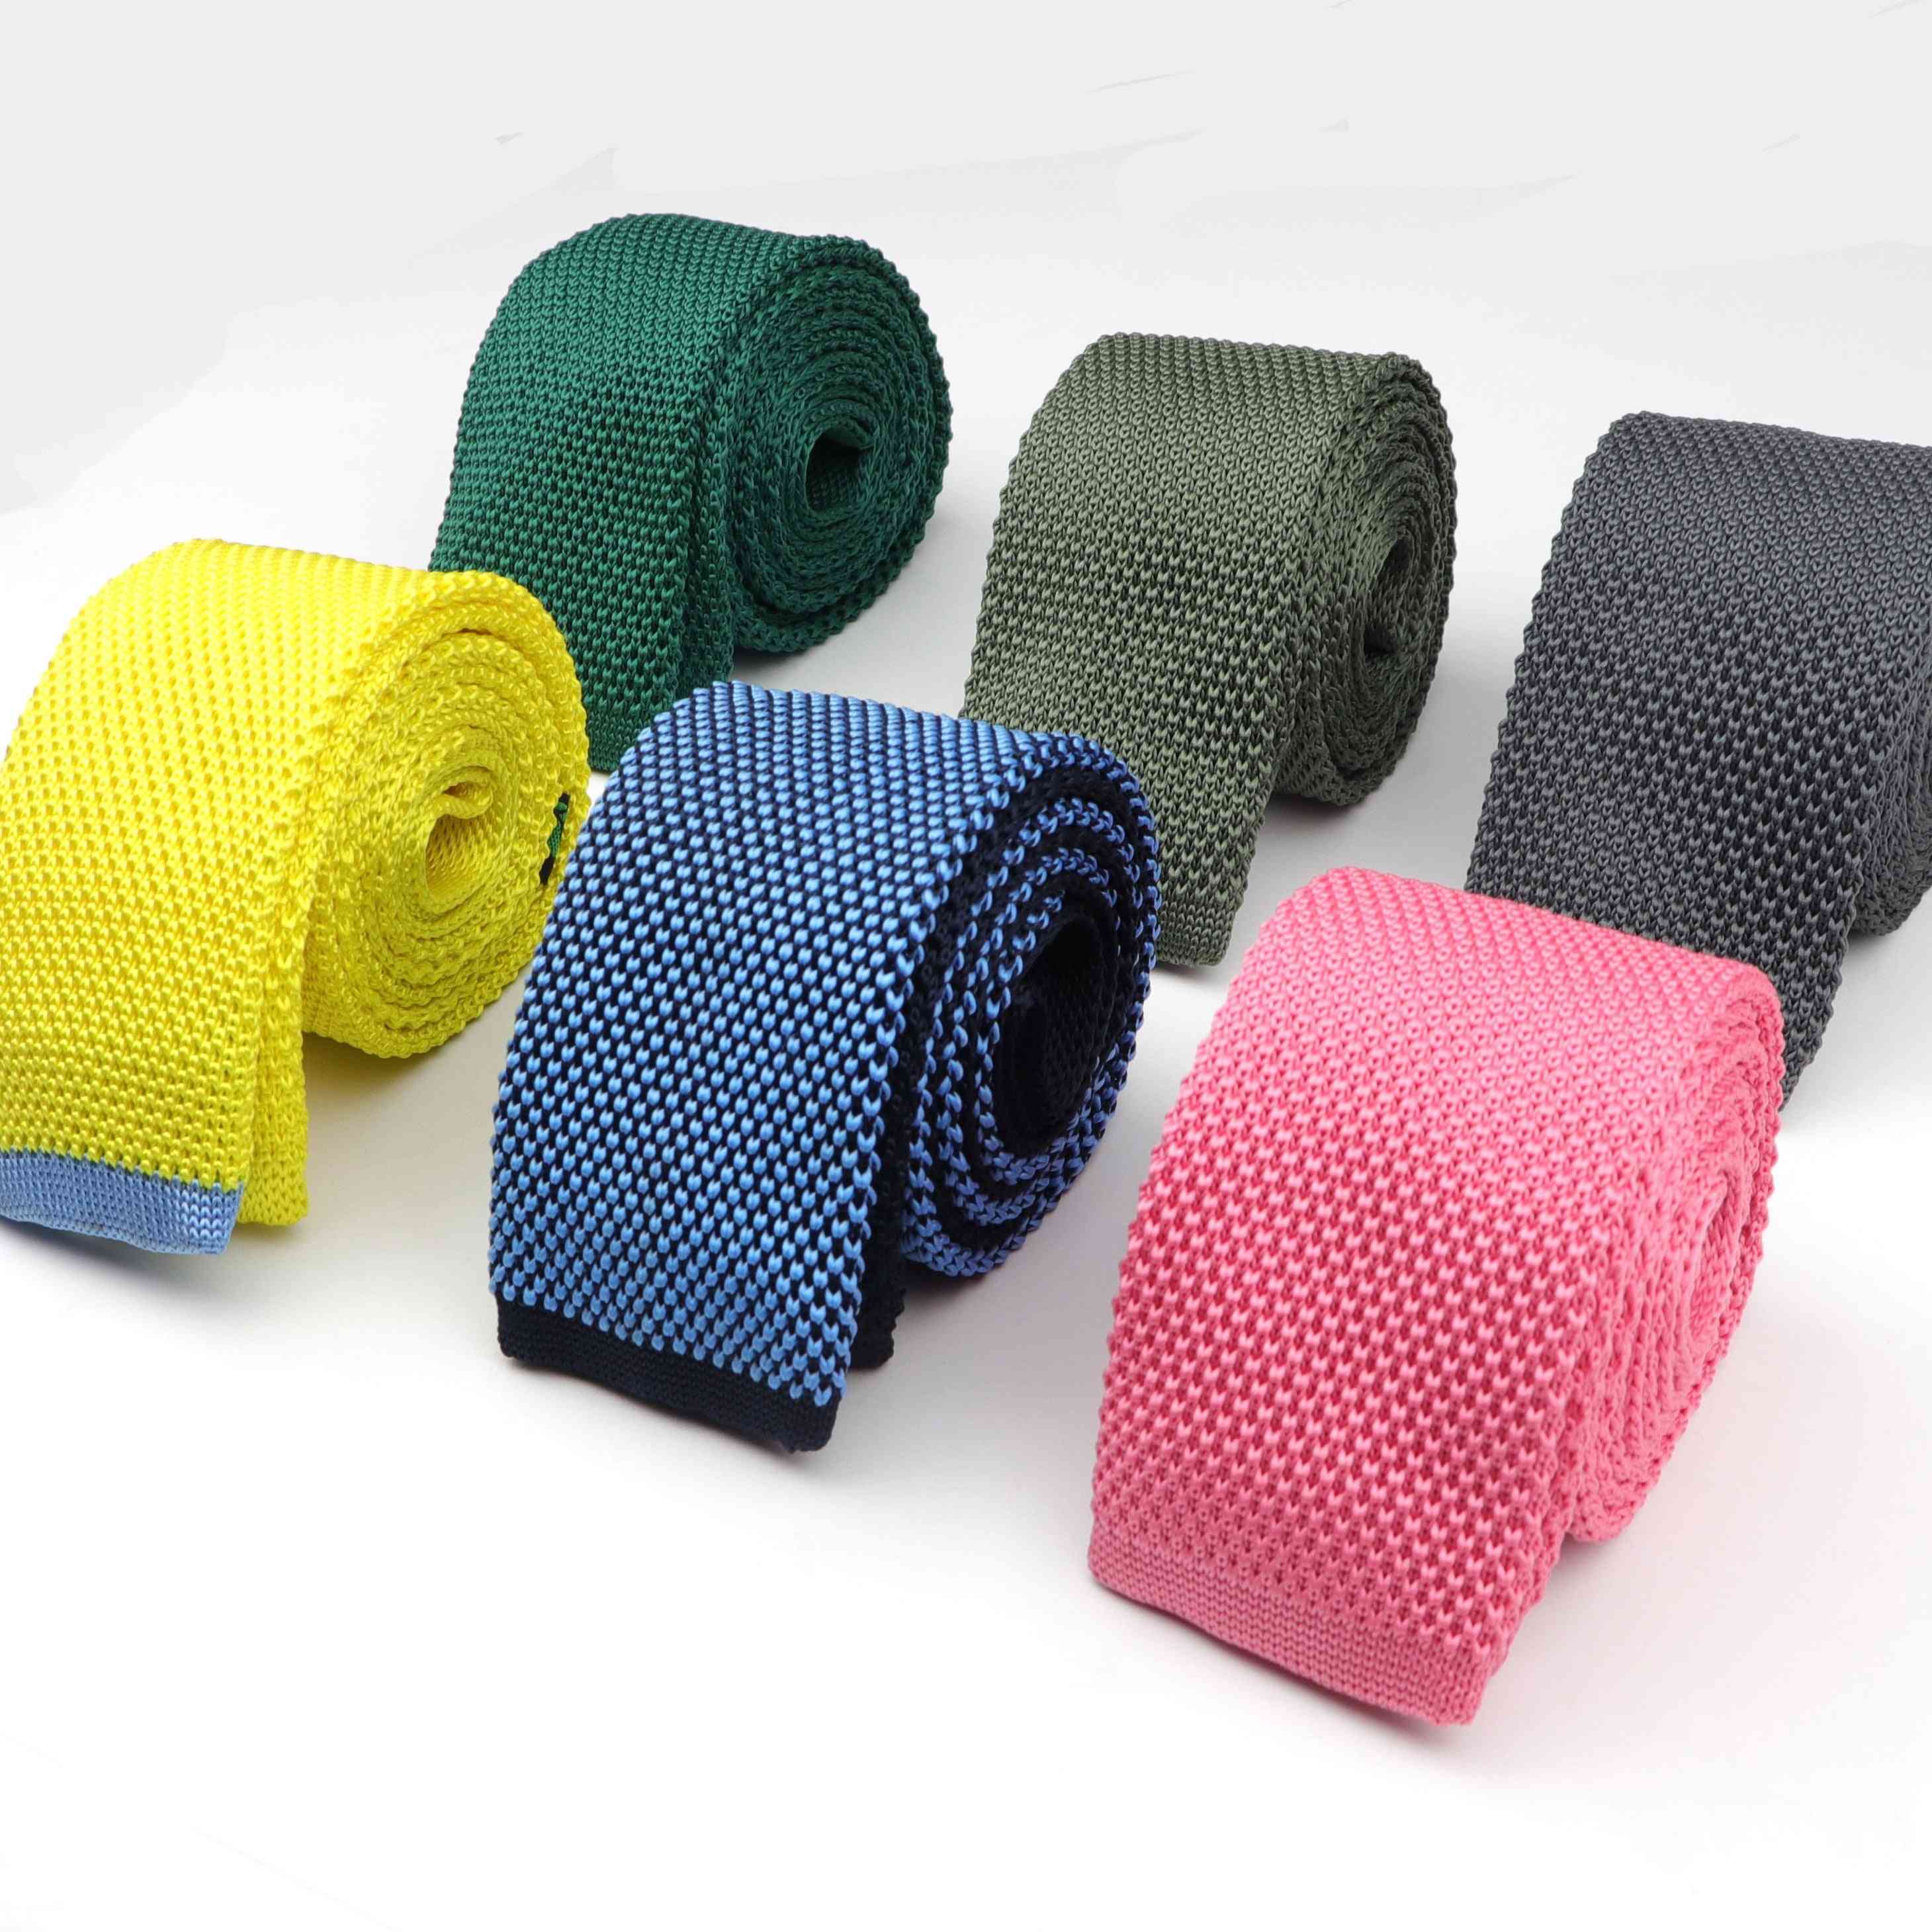 Men's Fashion Colourful Narrow Slim Knitted Necktie